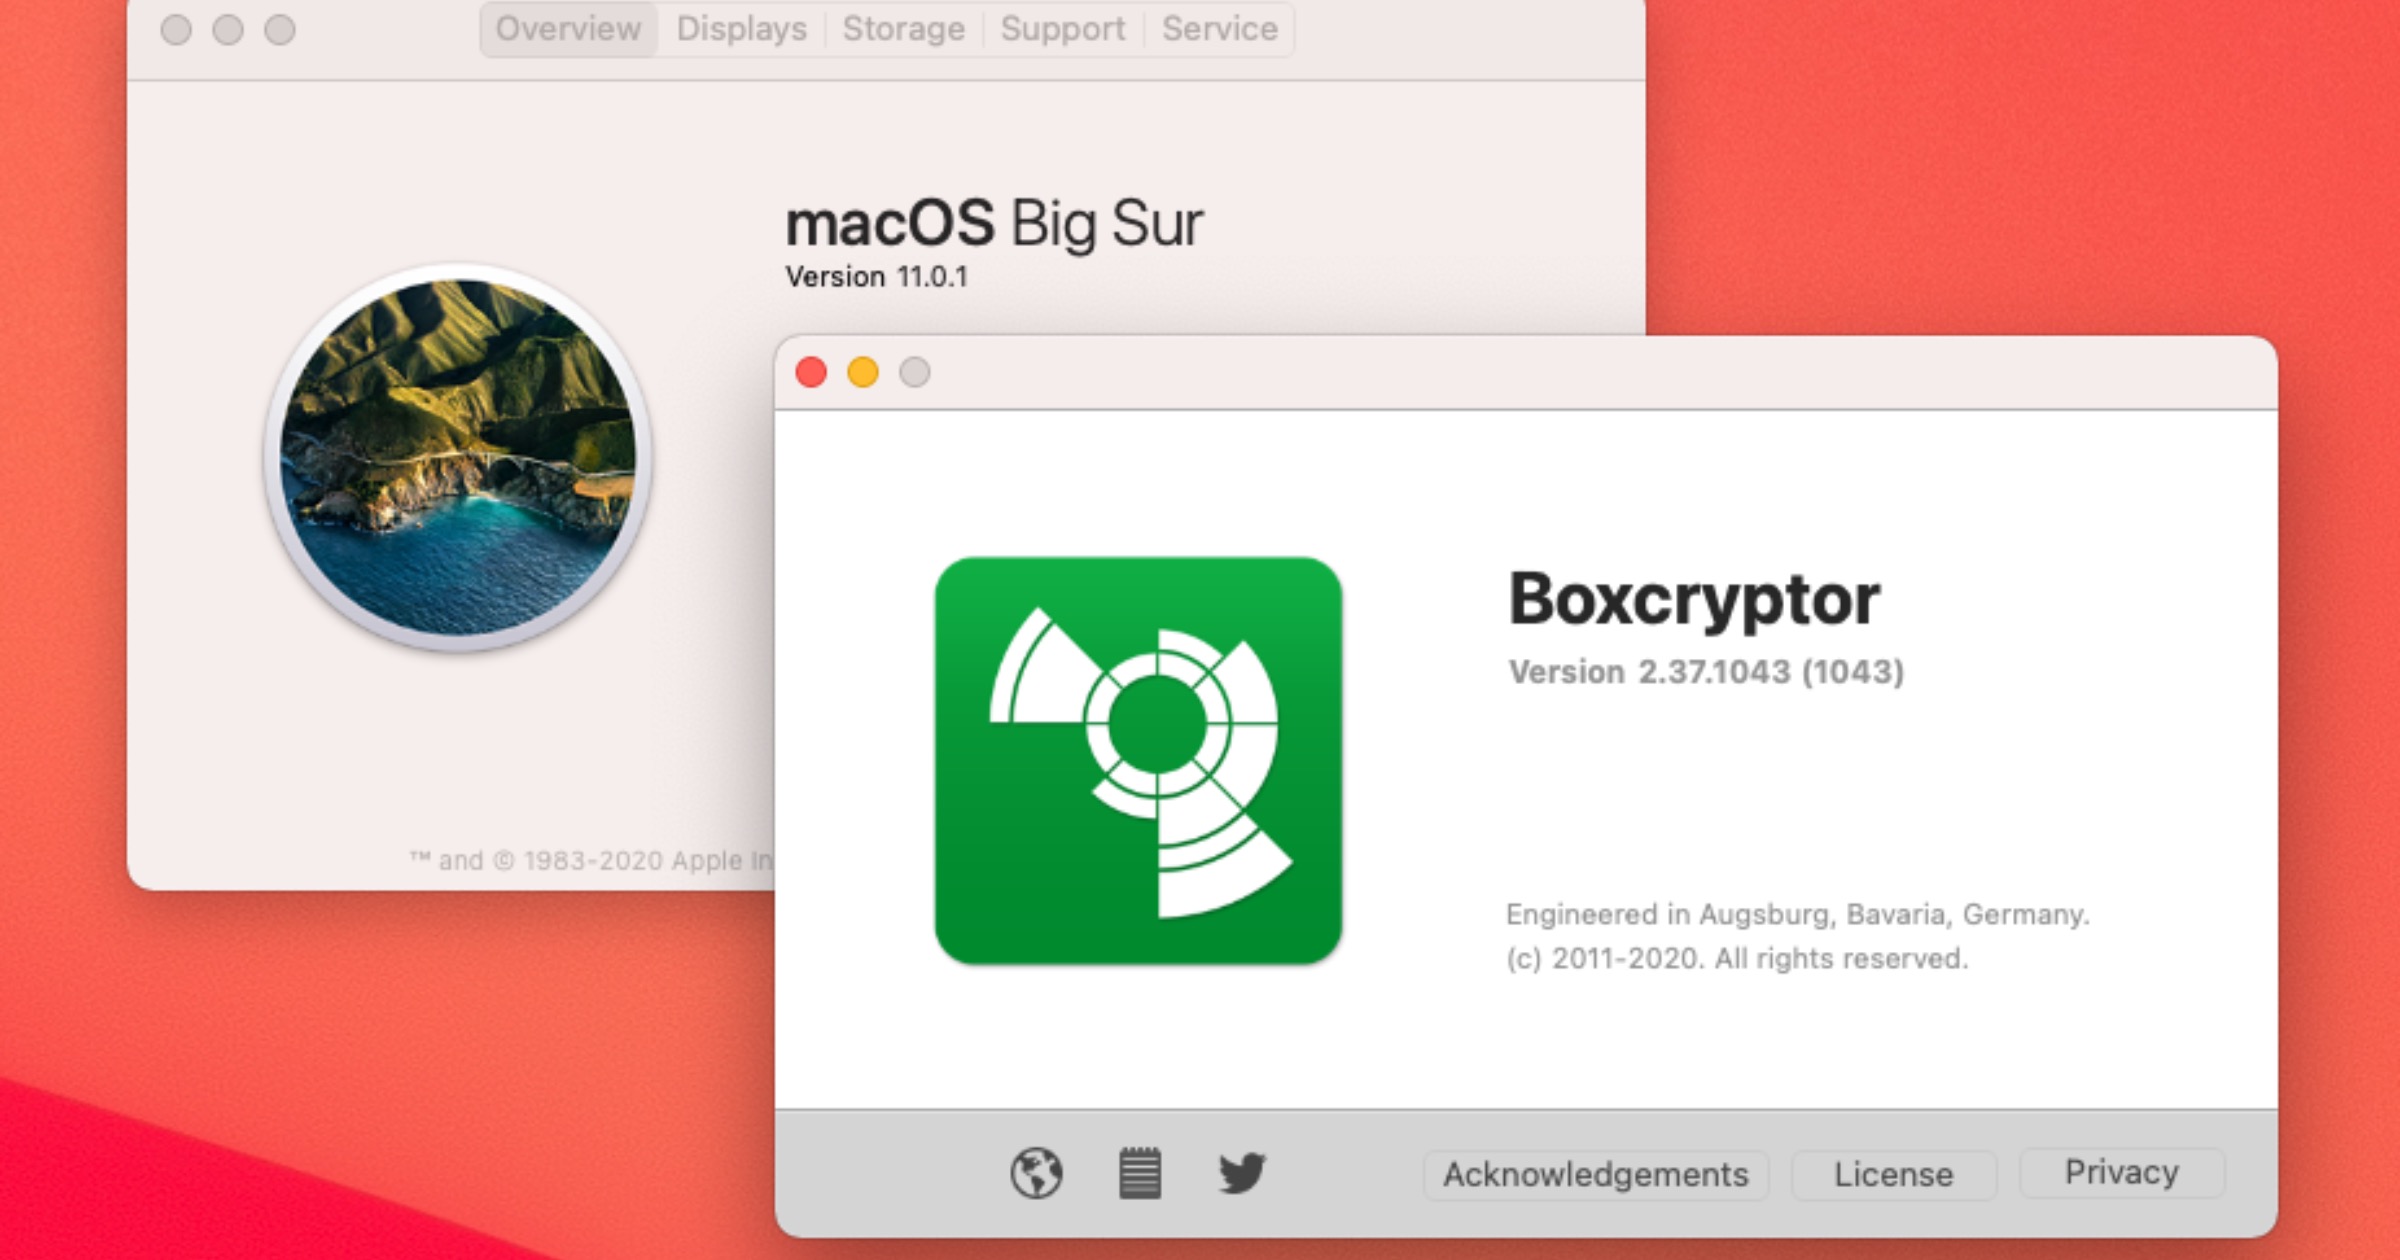 File Encryption App ‘Boxcryptor’ Announces macOS Big Sur Support